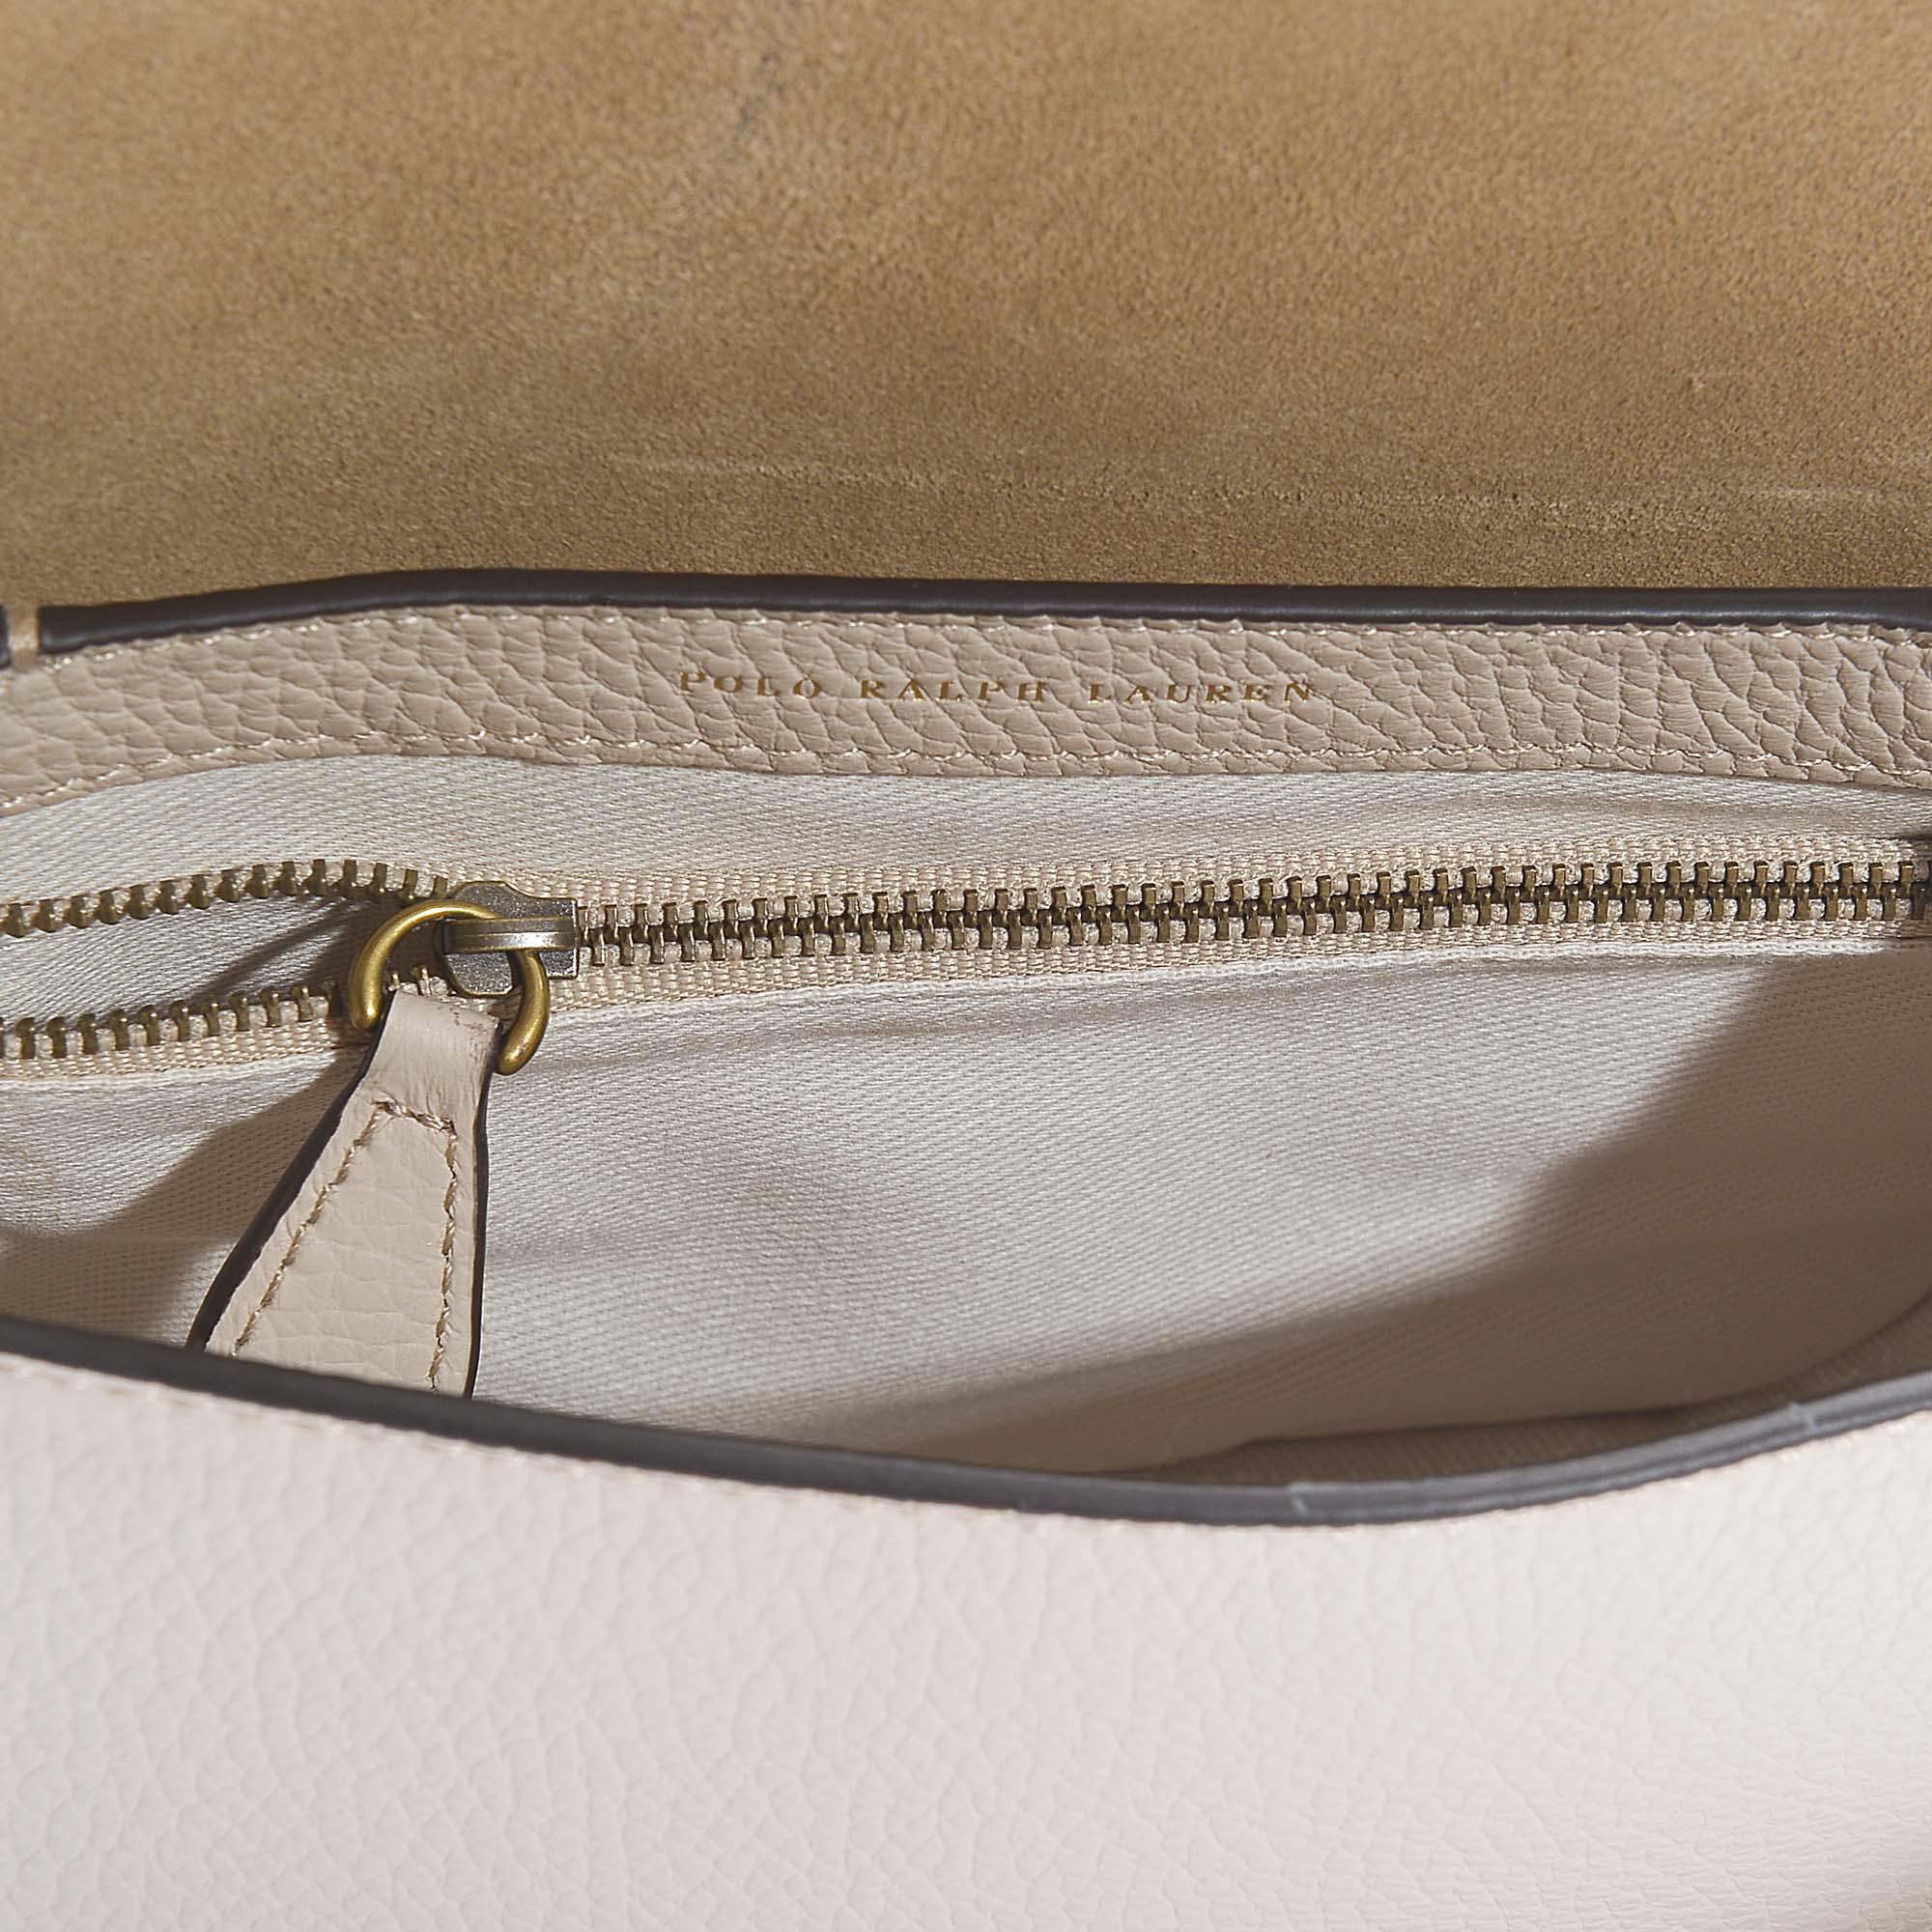 Ralph Lauren Pebbled Leather Lennox Bag in Vanilla (Natural) - Lyst